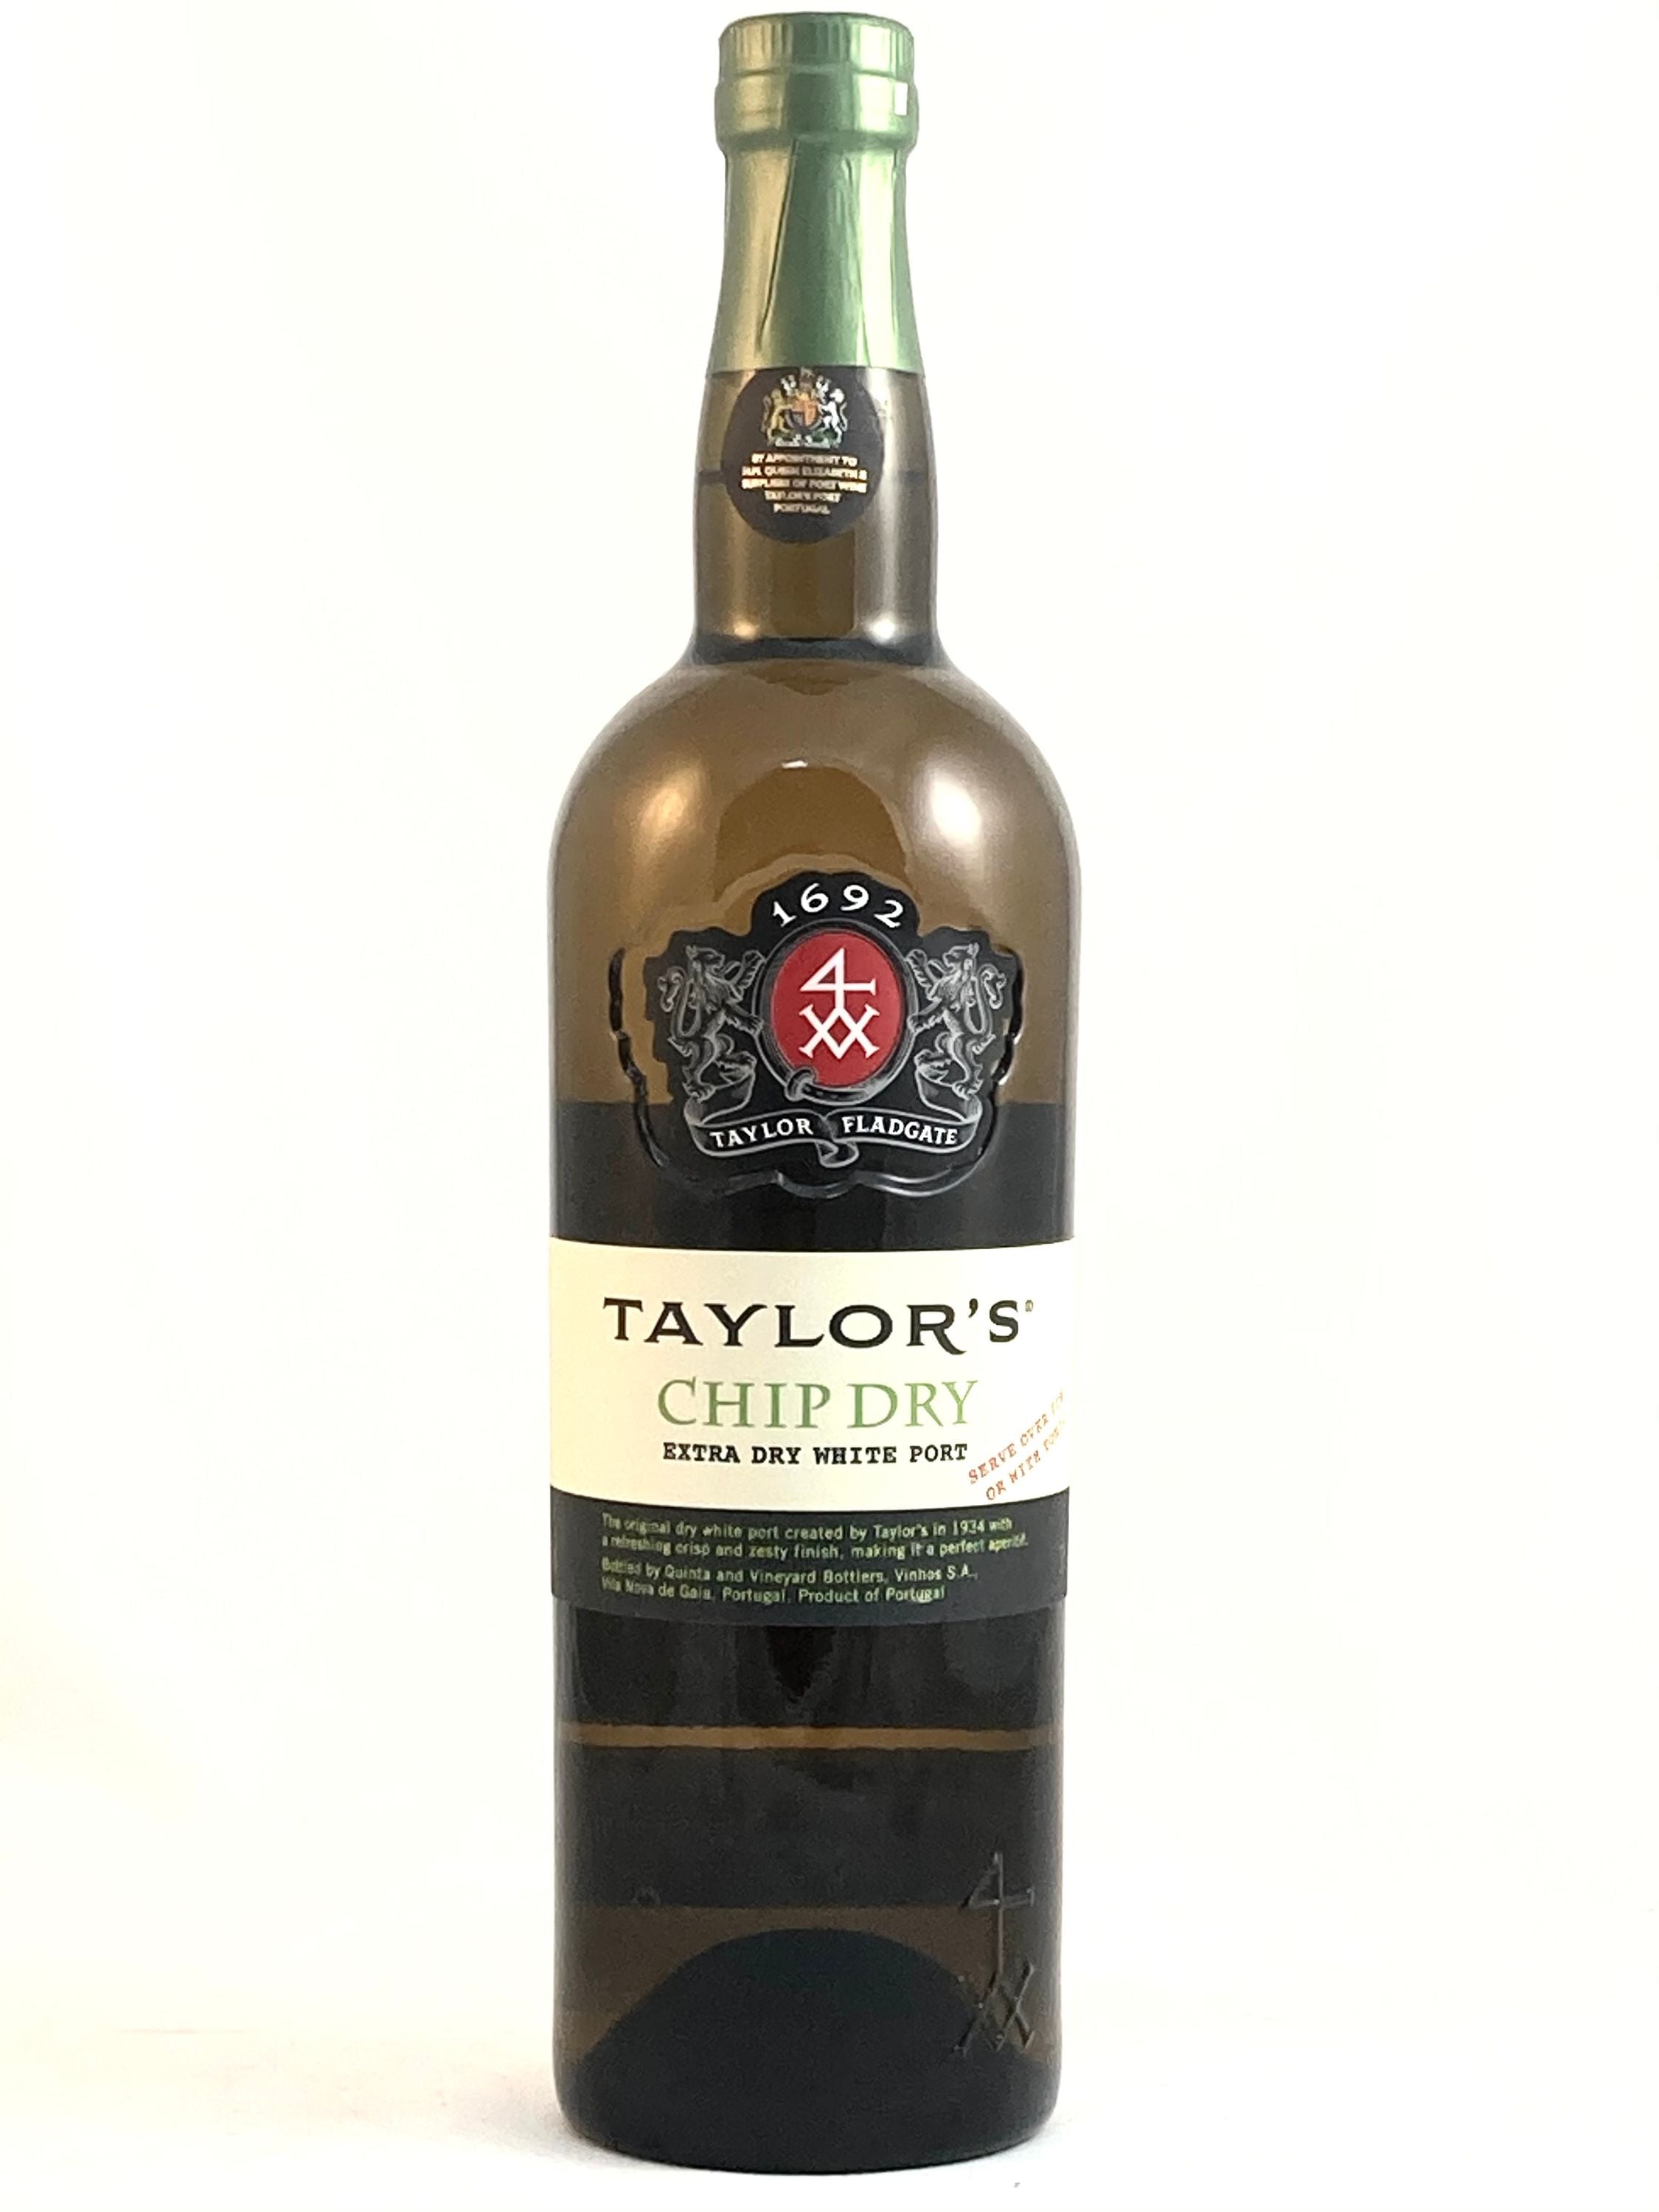 Taylor's Port Chip Dry Extra Dry White Port 0,75l, alk. 20 % tilavuudesta